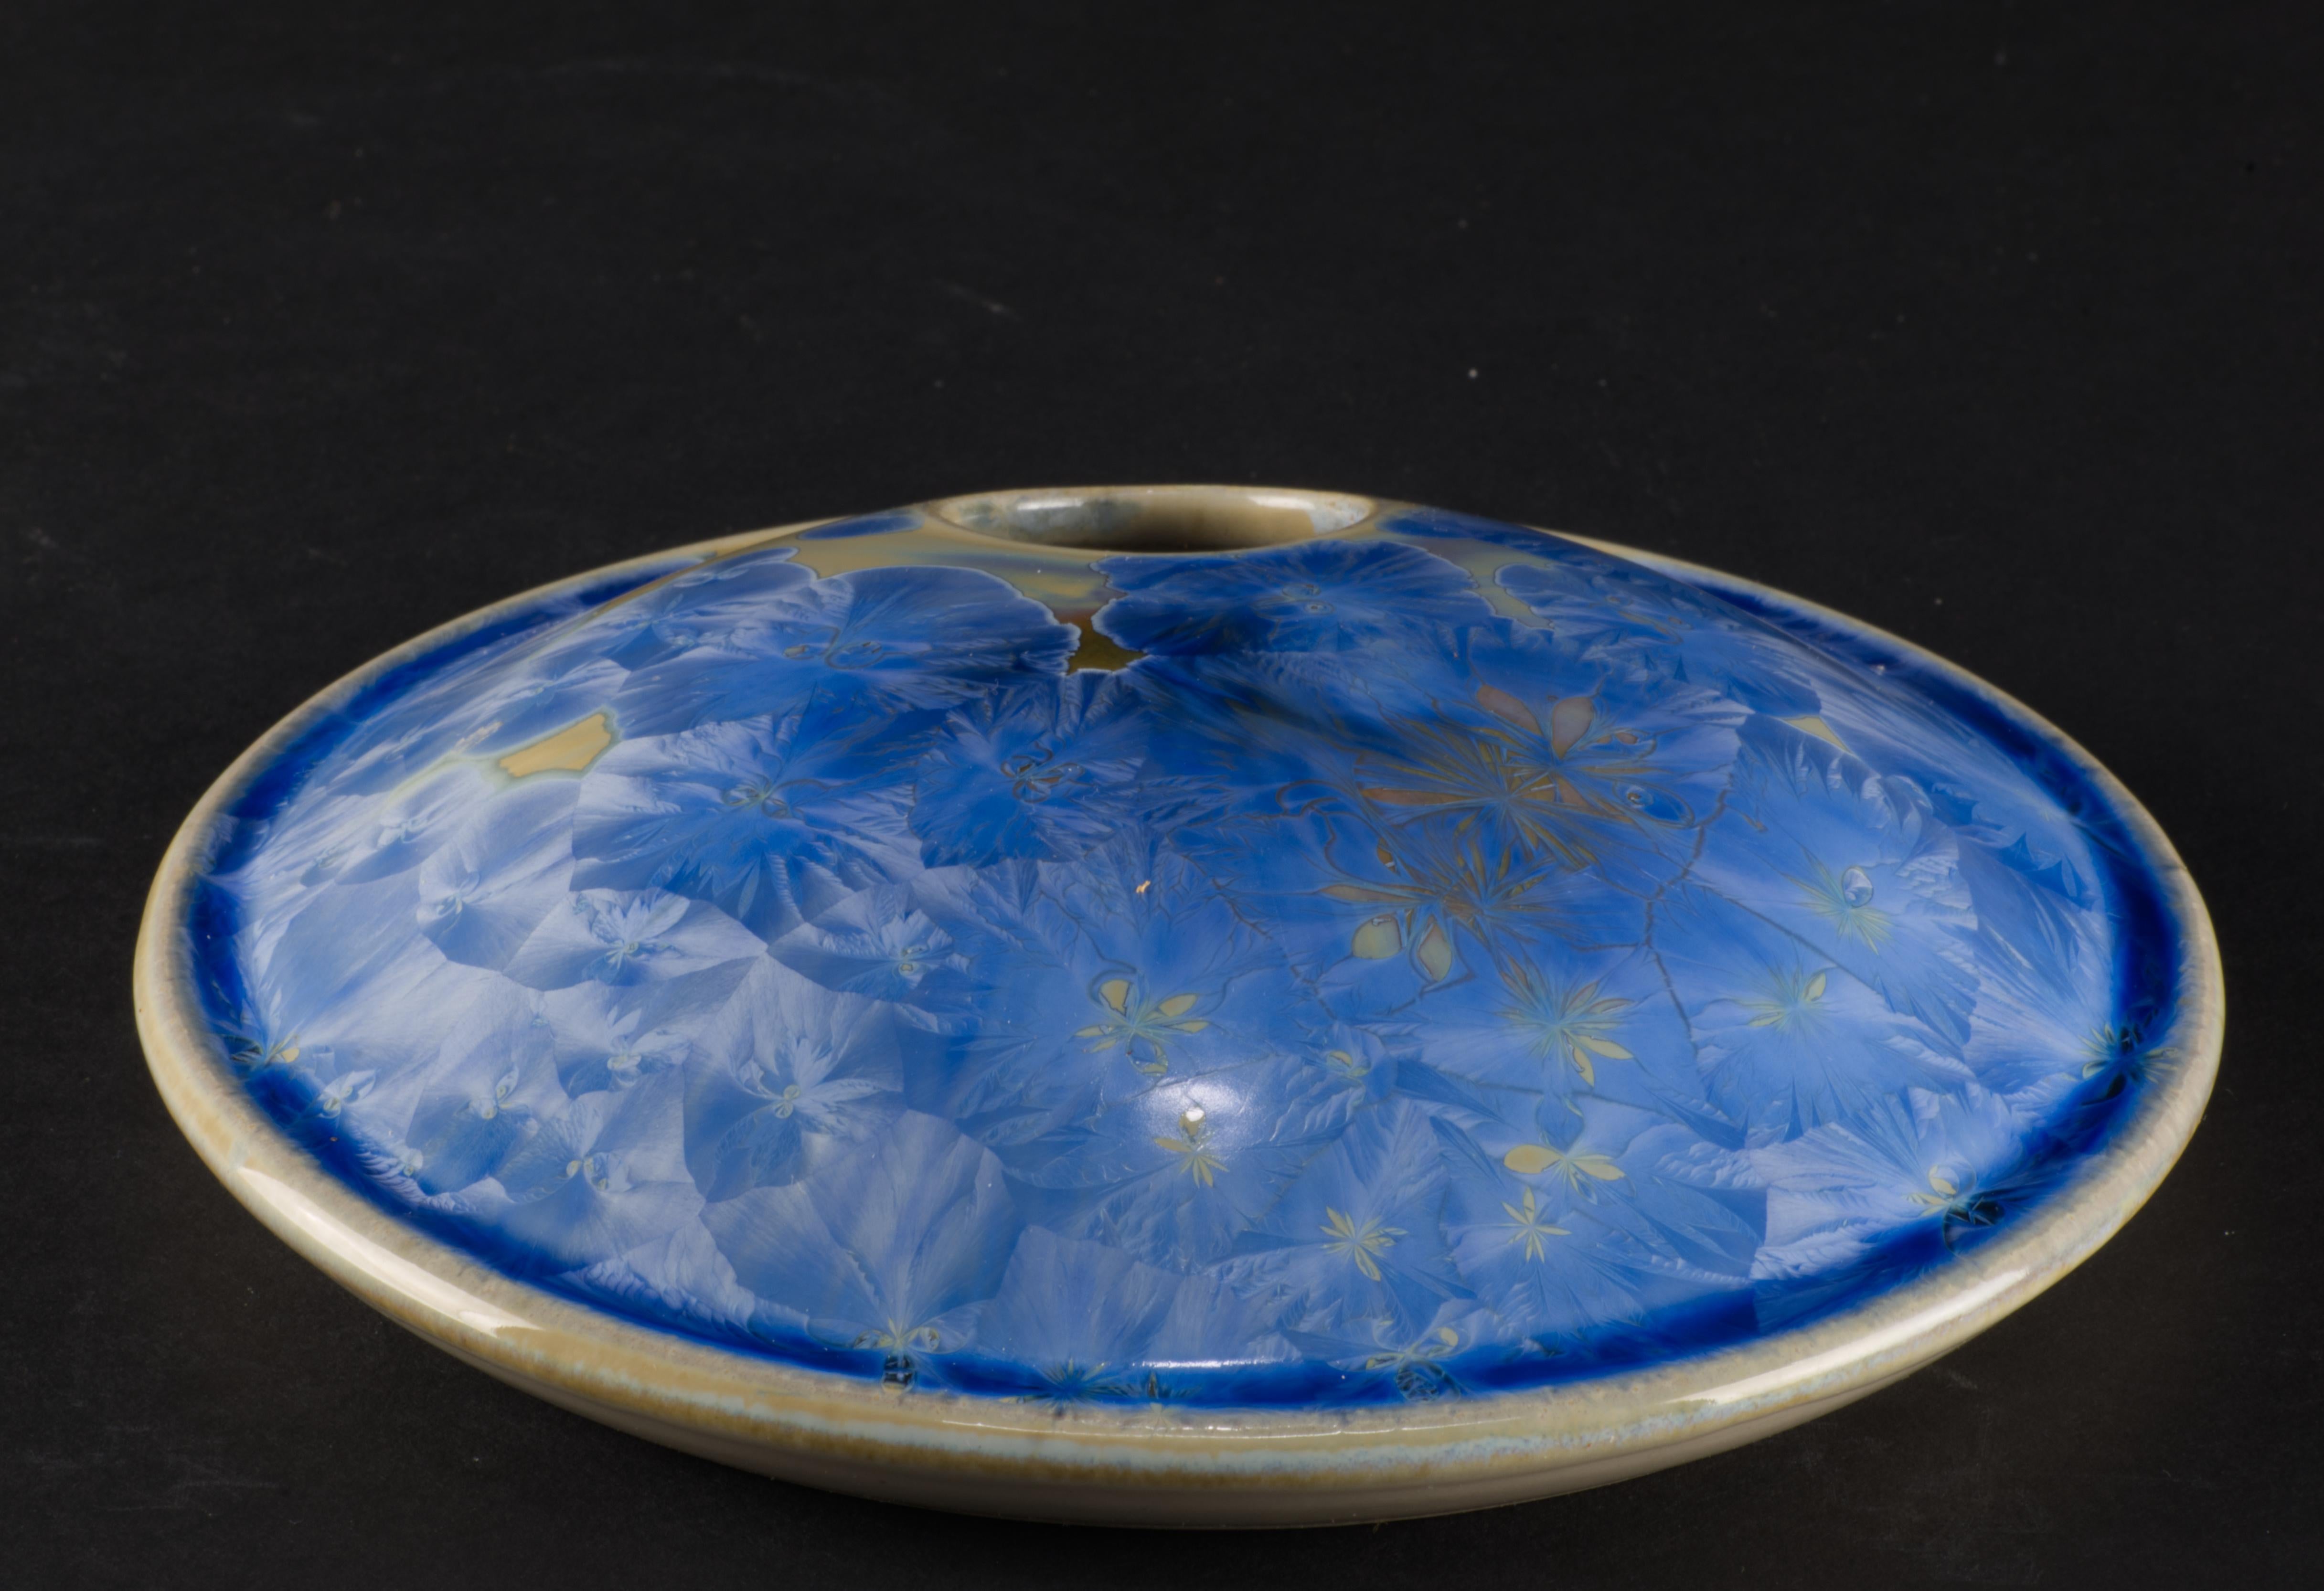 Crystalline Glaze Ceramic Ikebana Vase, Blue, American Studio Pottery, 2003 For Sale 2